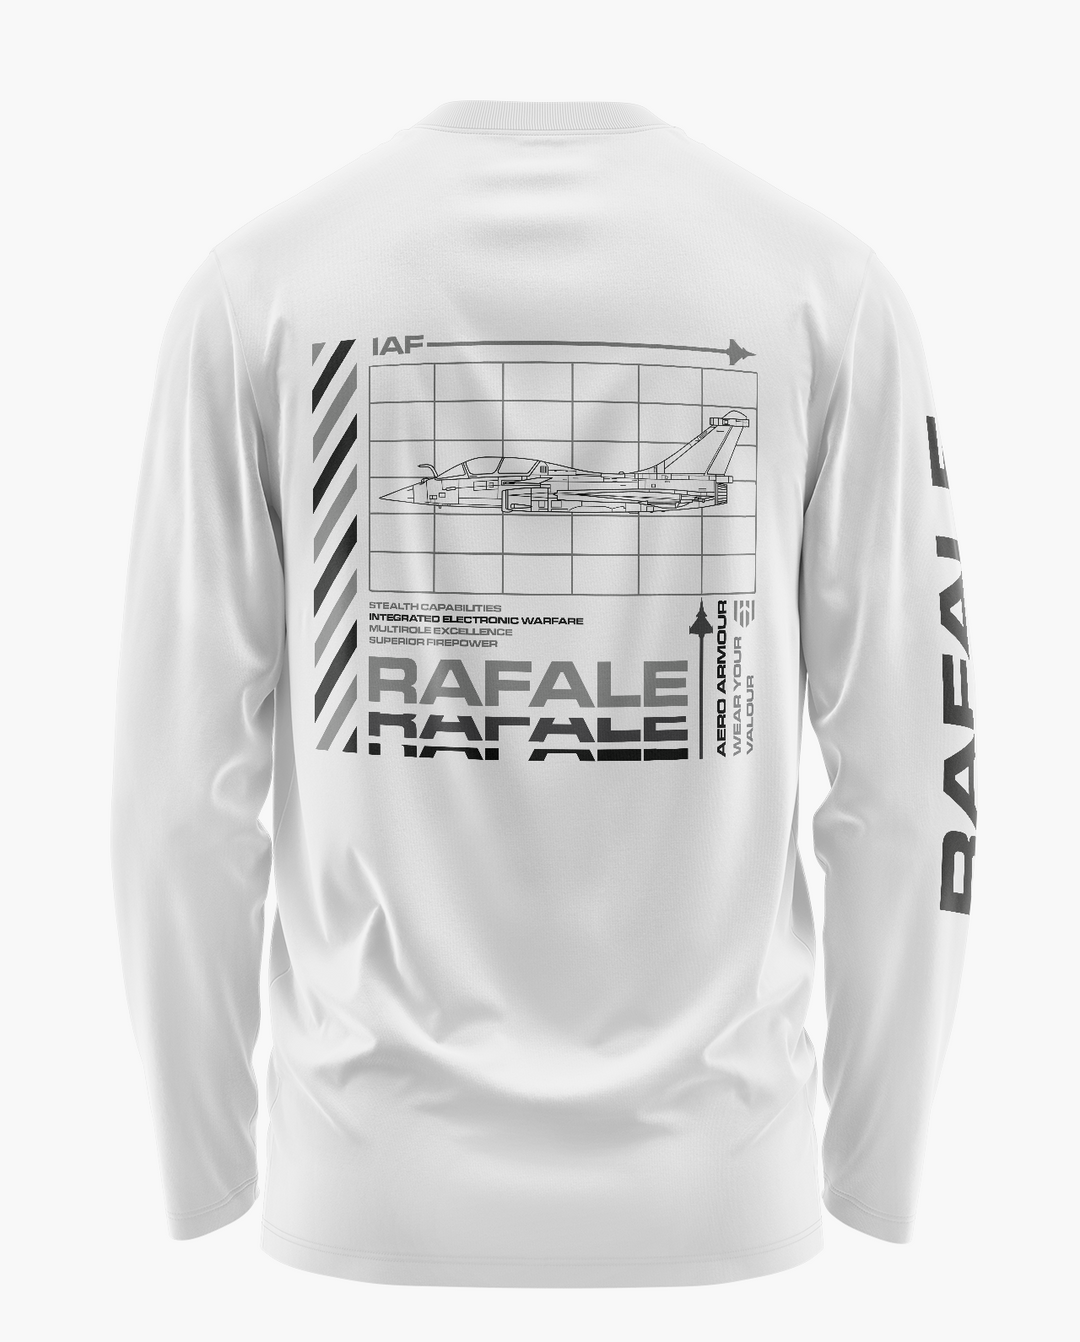 RAFALE STEALTH Full Sleeve T-Shirt